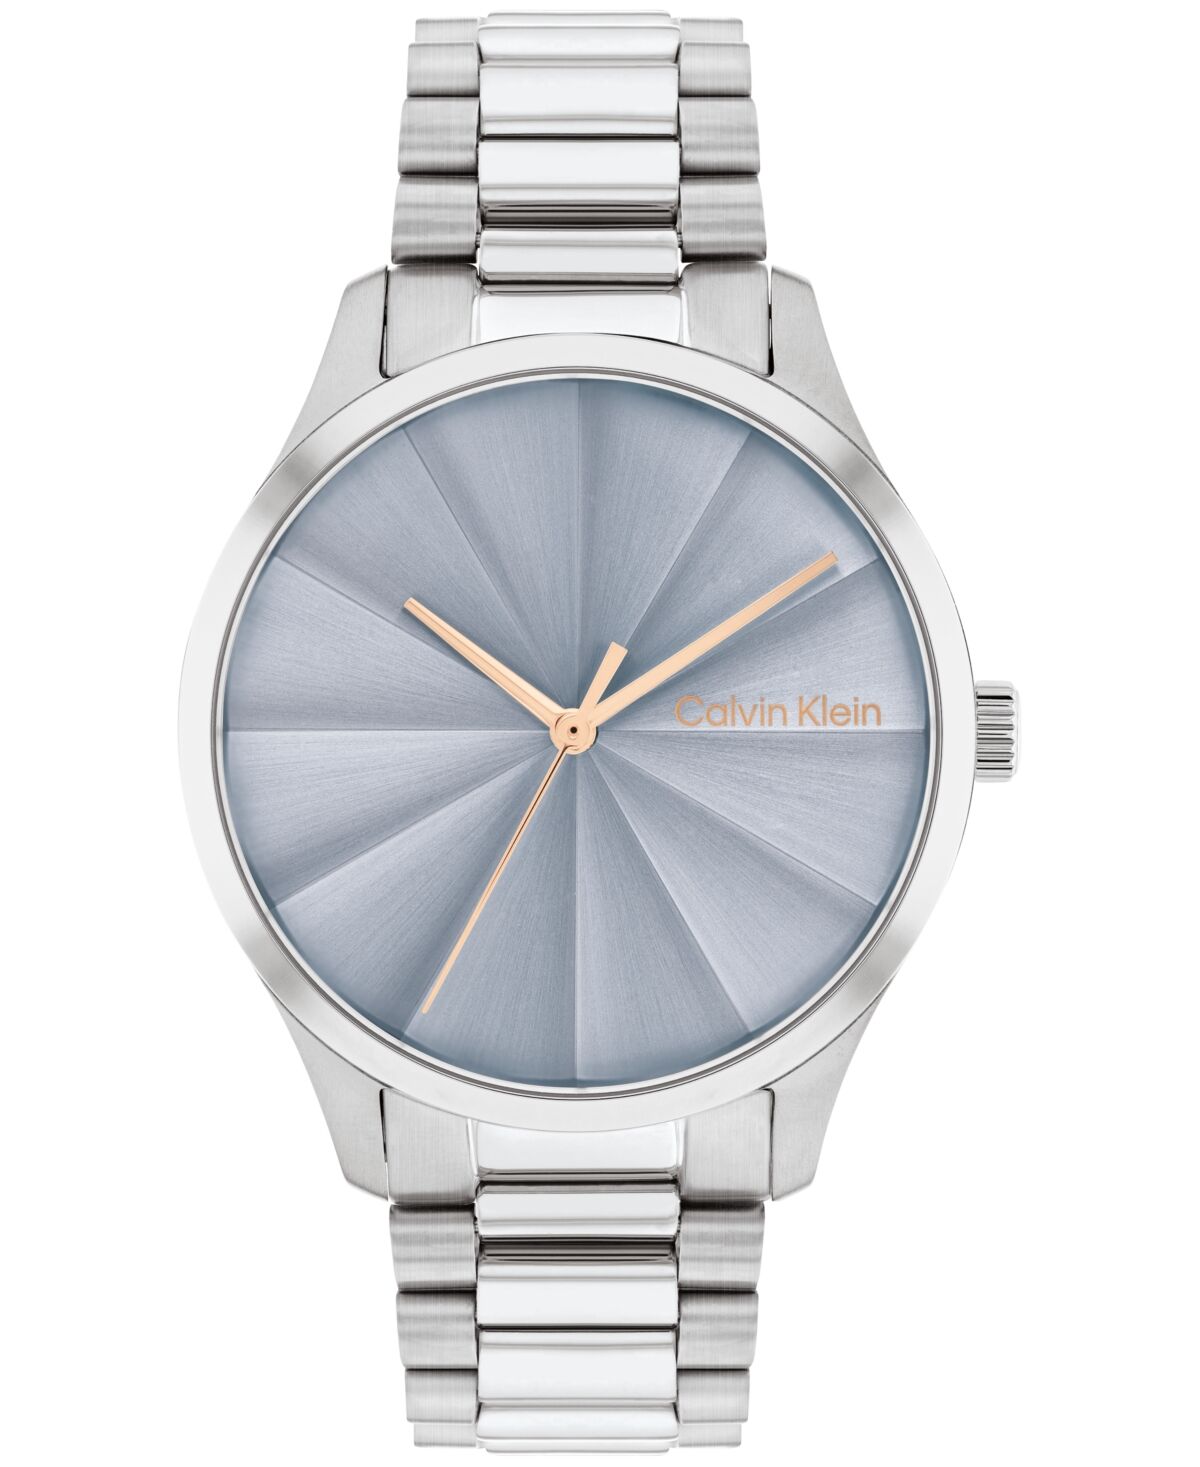 Calvin Klein Unisex 3-Hand Silver-Tone Stainless Steel Bracelet Watch 35mm - Stainless Steel